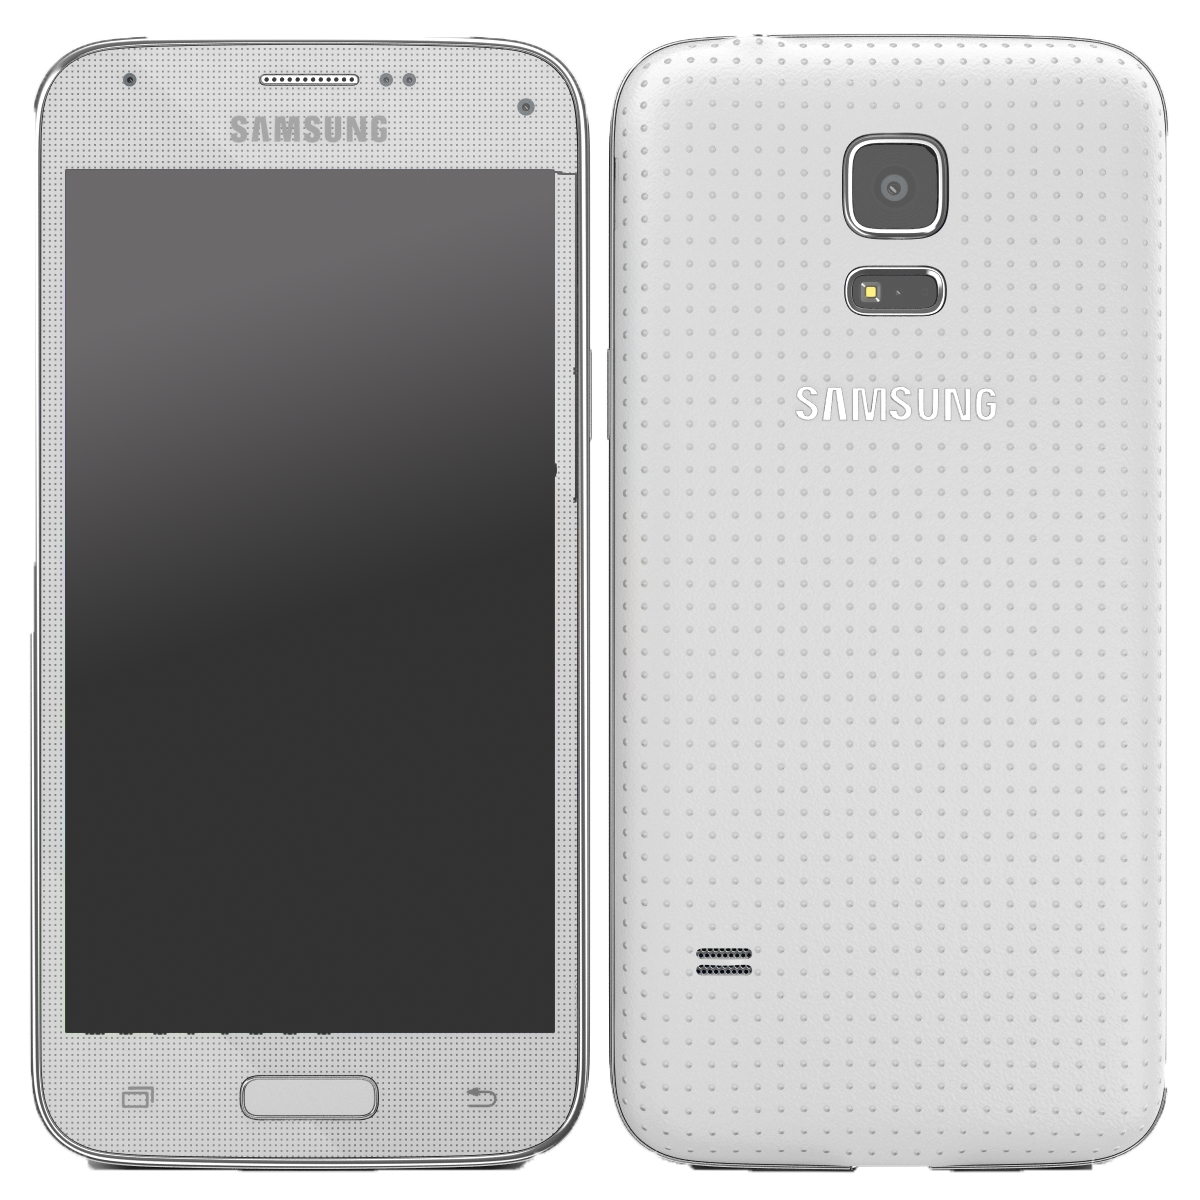 Samsung Galaxy S5 mini G800F weiß - Ohne Vertrag